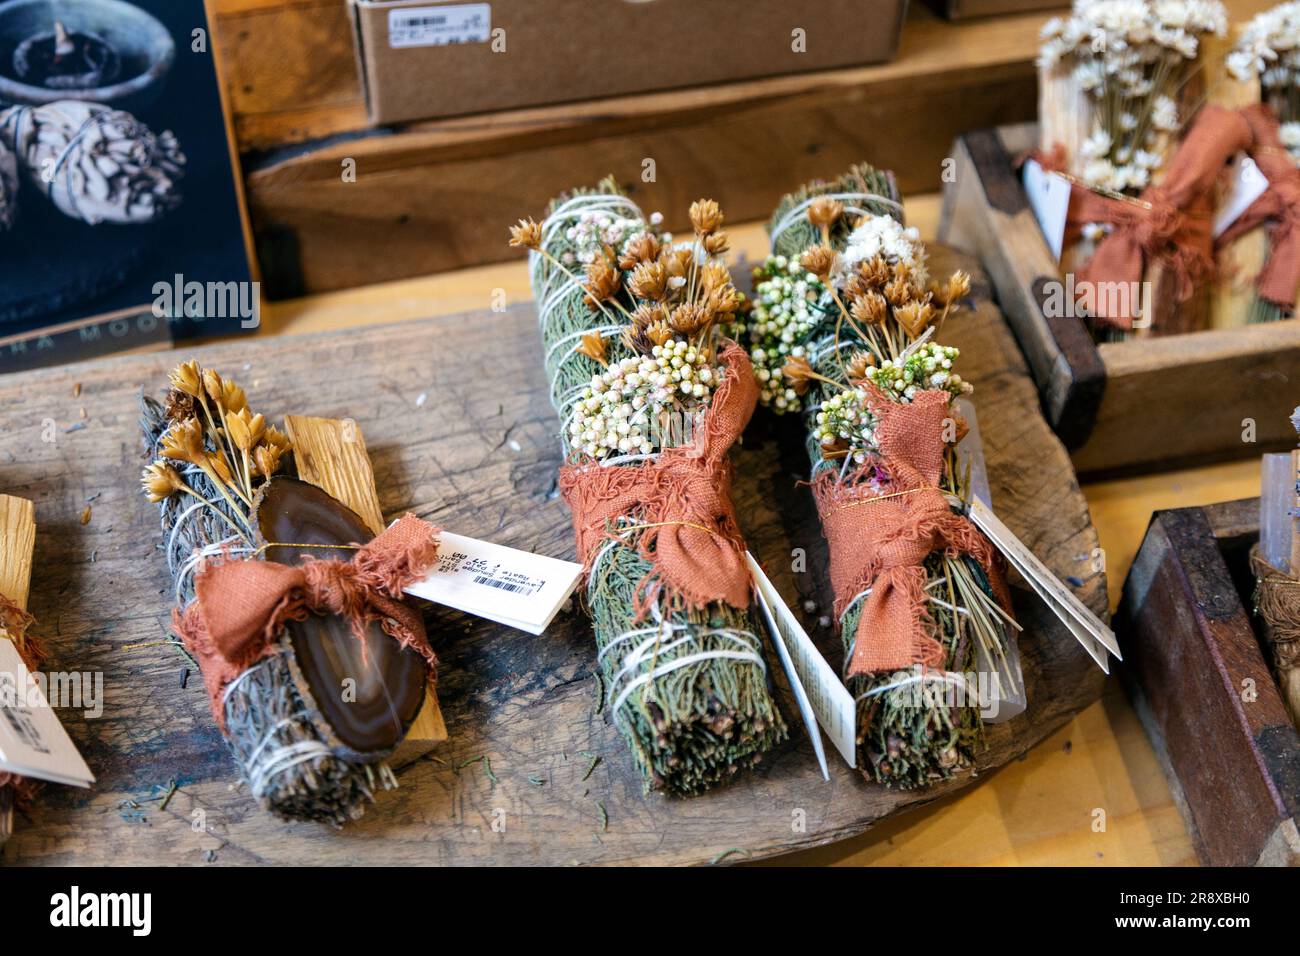 Lavender and juniper smudge sticks at a shop (Inspitalfields, Spitalfields Market, London, England) Stock Photo